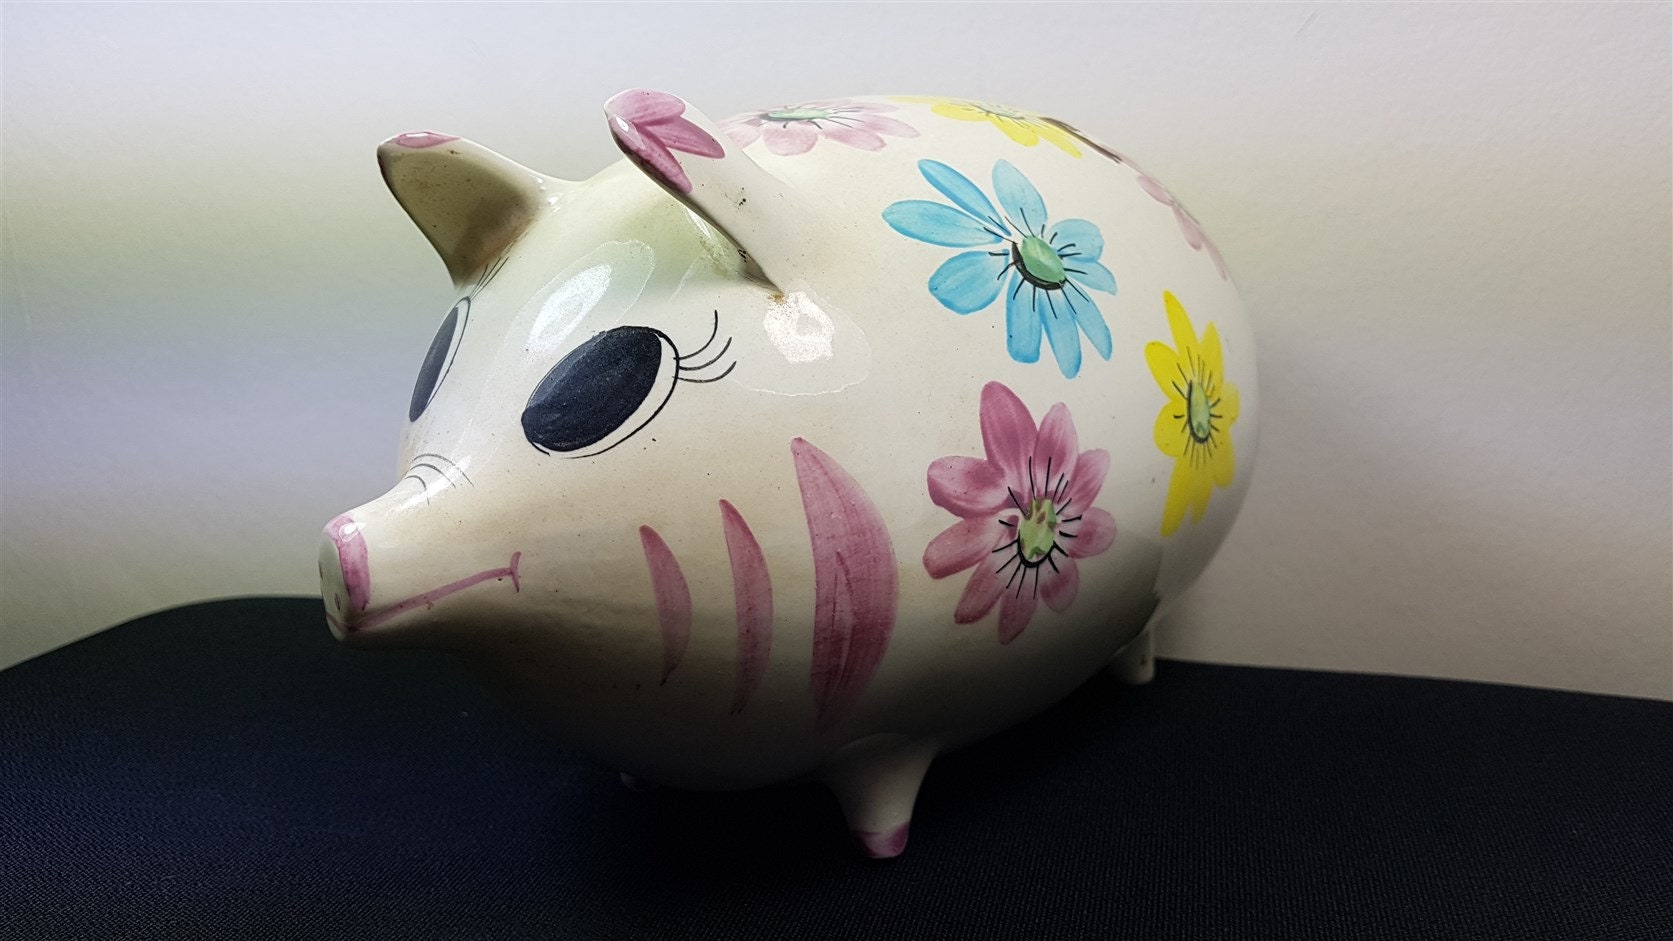 Paint Your Own Piggy Bank Ceramic Novelty Money Box Saving Kids Craft Gift 